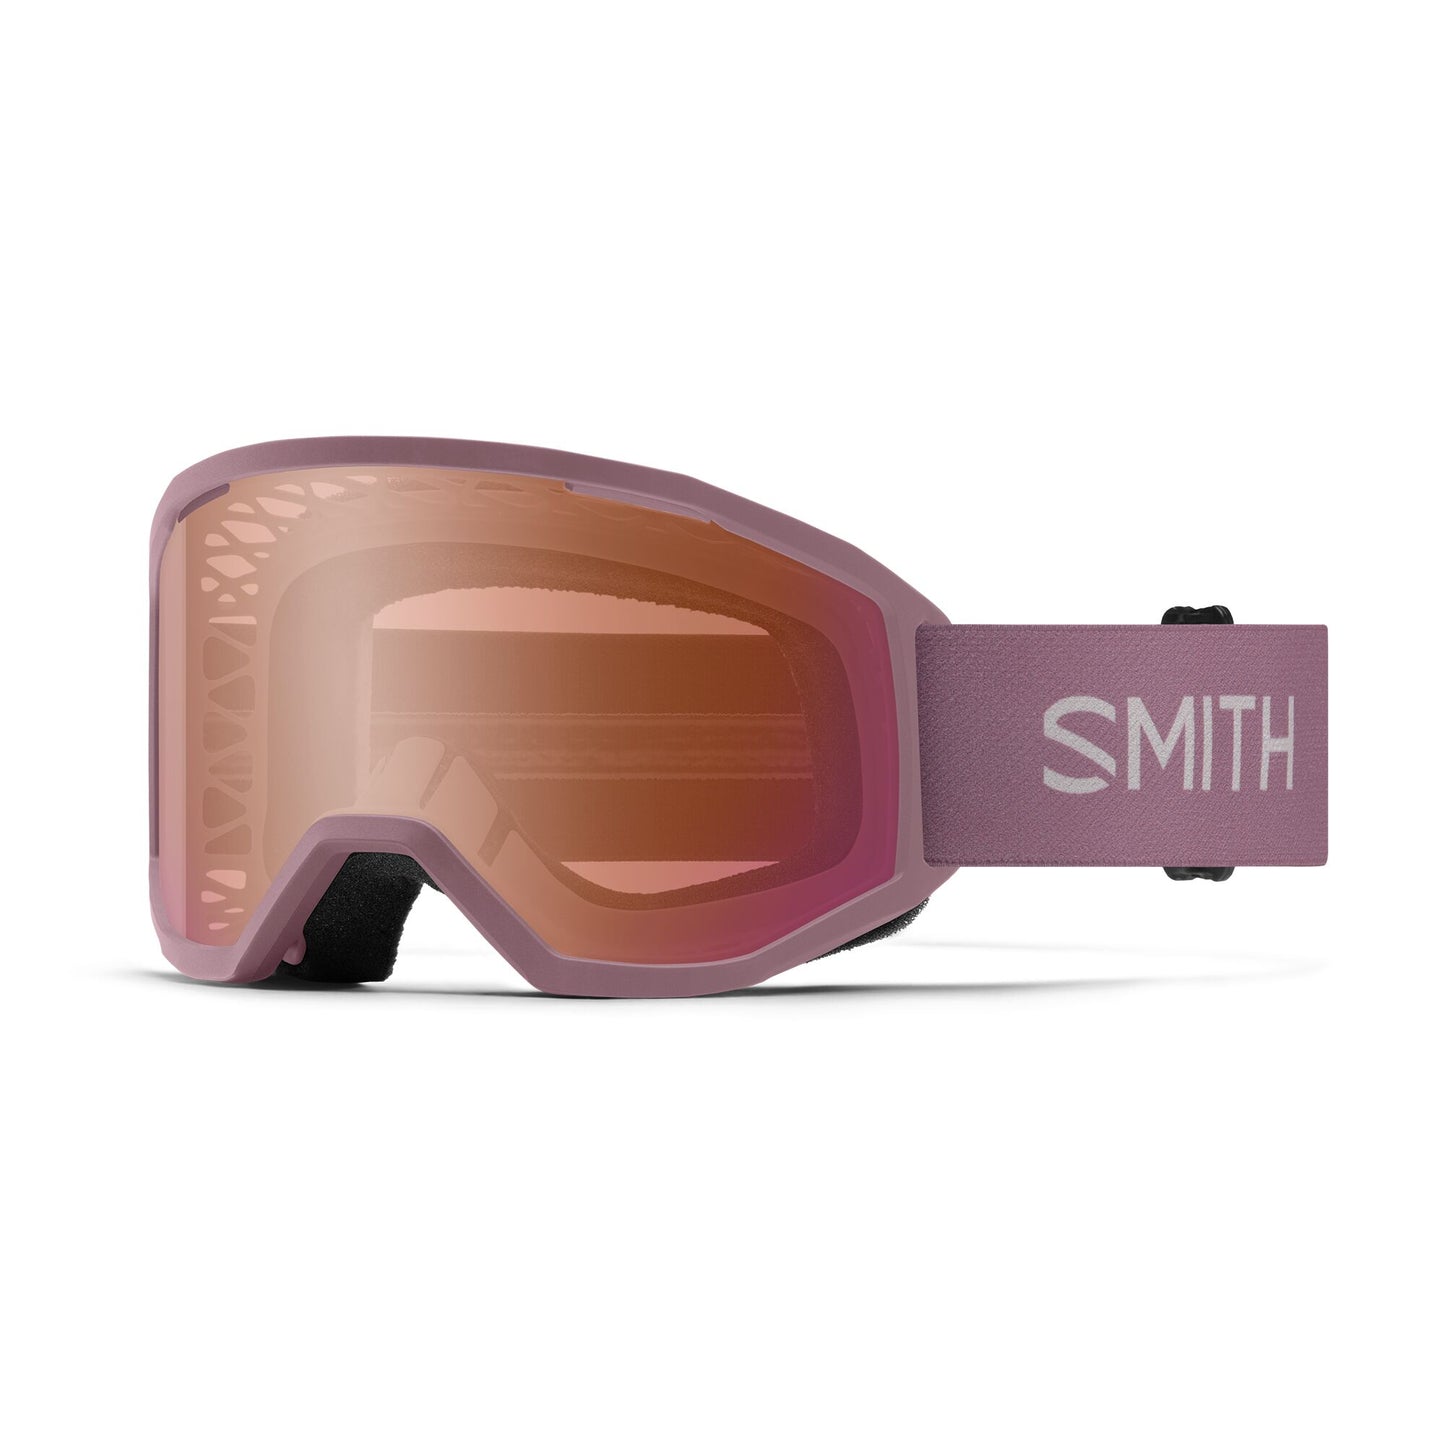 Smith Loam Goggles - One Size Fits Most - Dusk - Bone - Contrast Rose Flash AF Lens